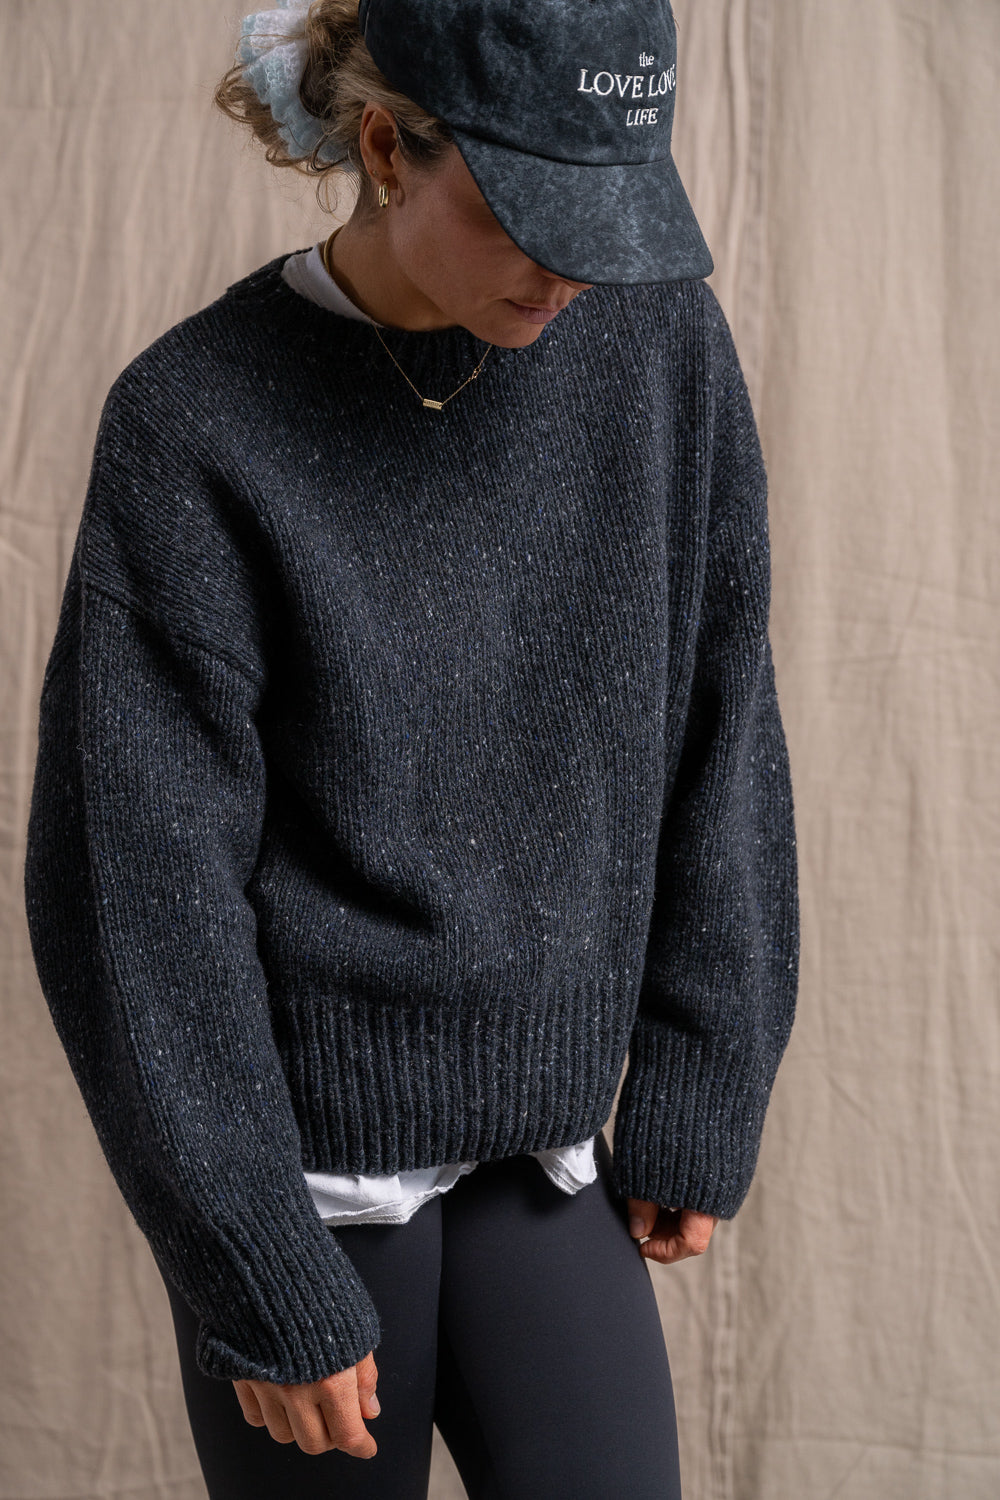 Cloud Black sweater